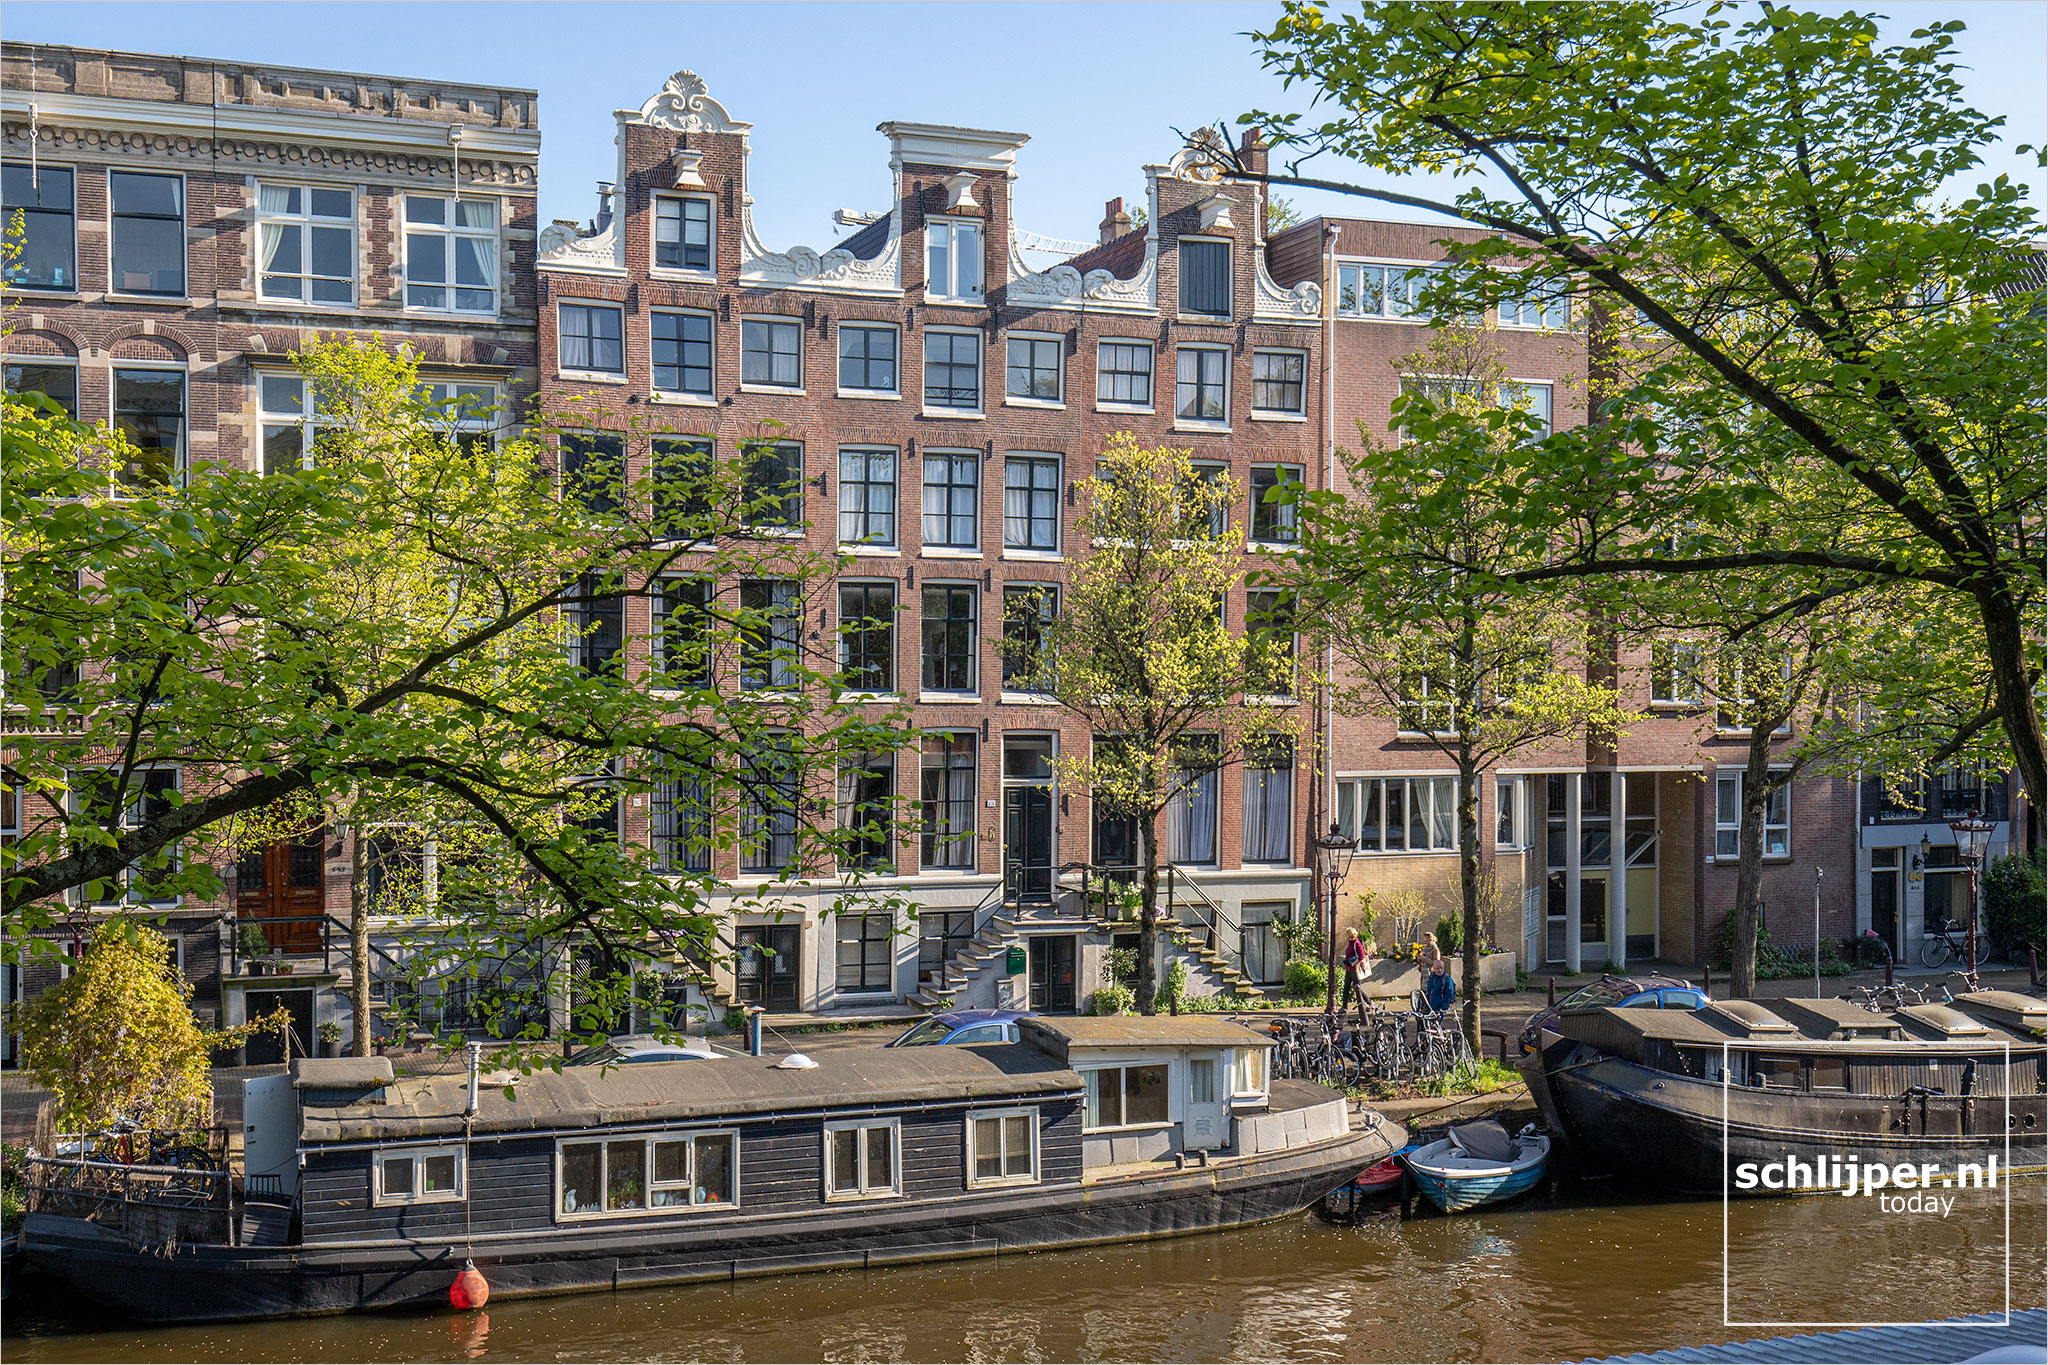 The Netherlands, Amsterdam, 2 mei 2022